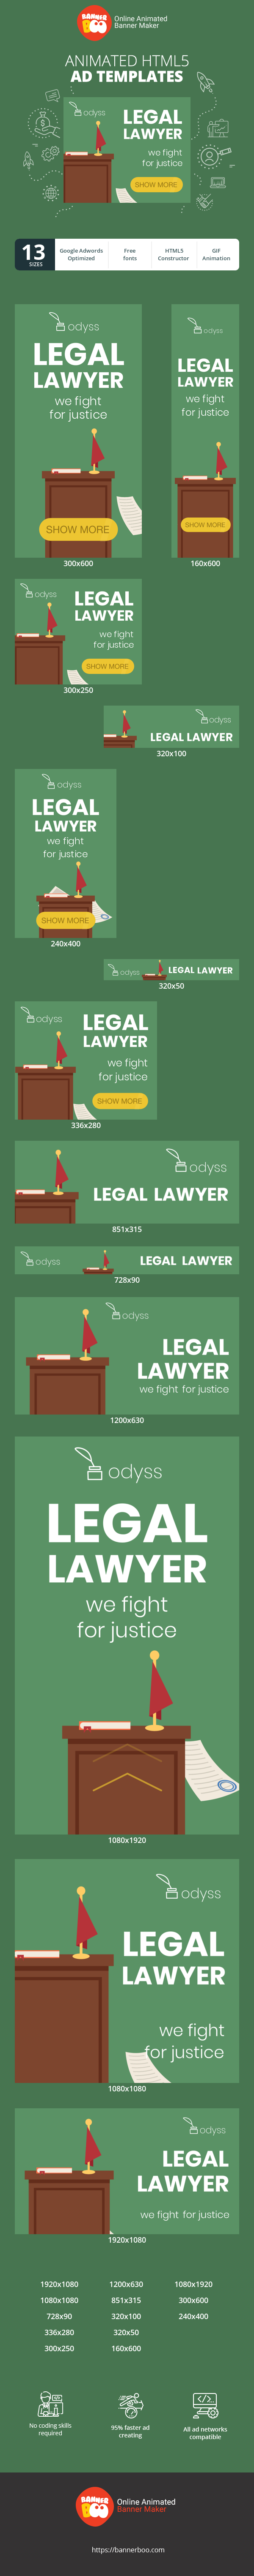 Шаблон рекламного банера — Legal Lawyer  — We Fight For Justice